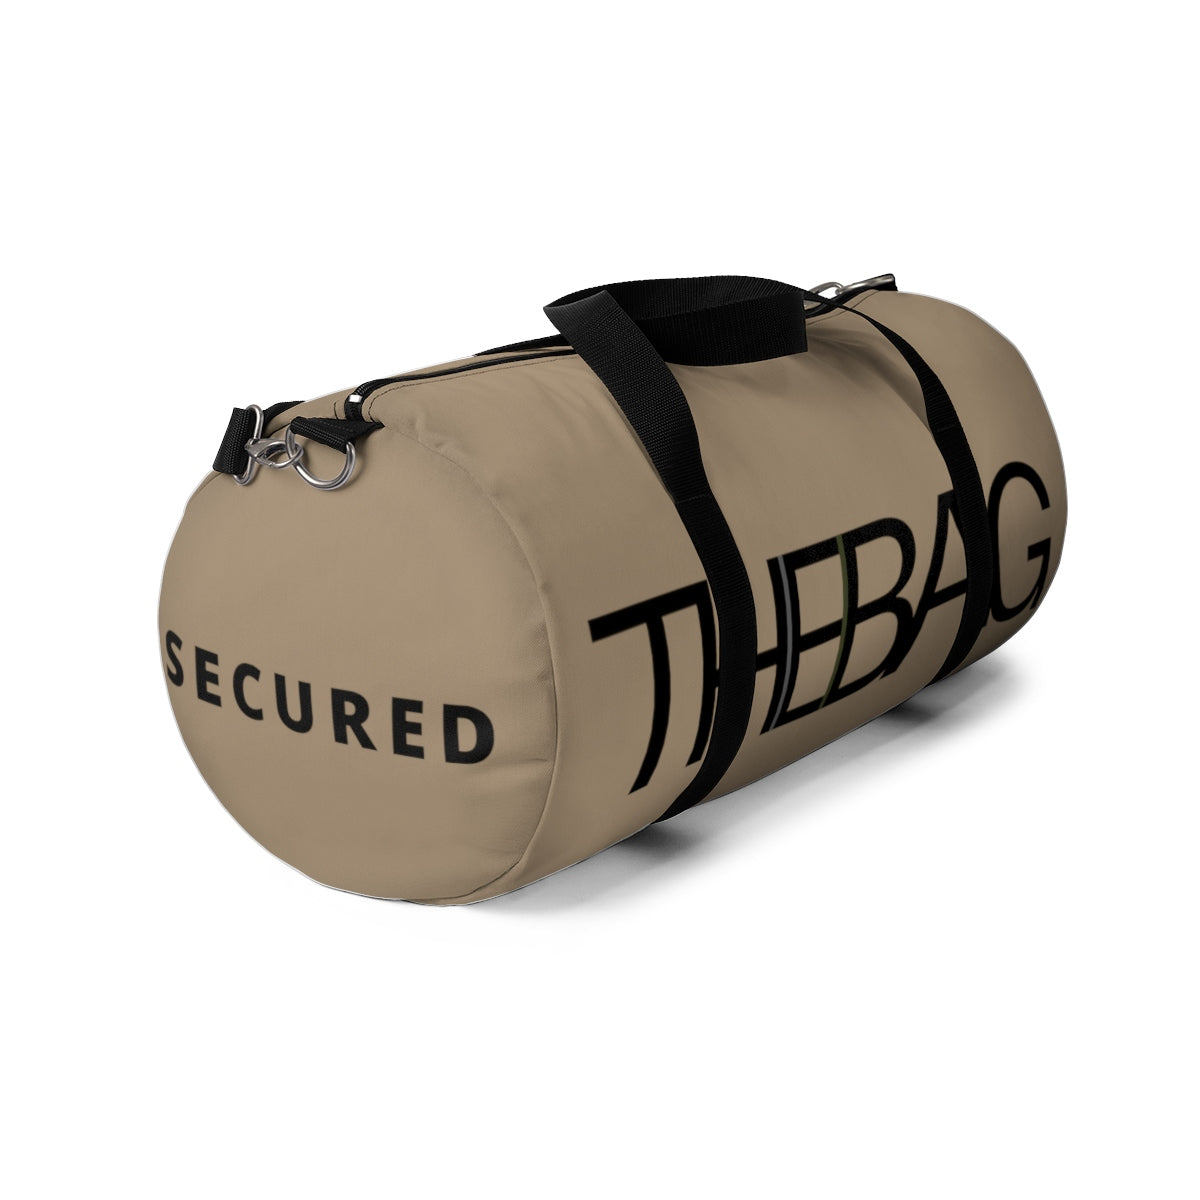 Secure The Bag (Khaki Duffle)